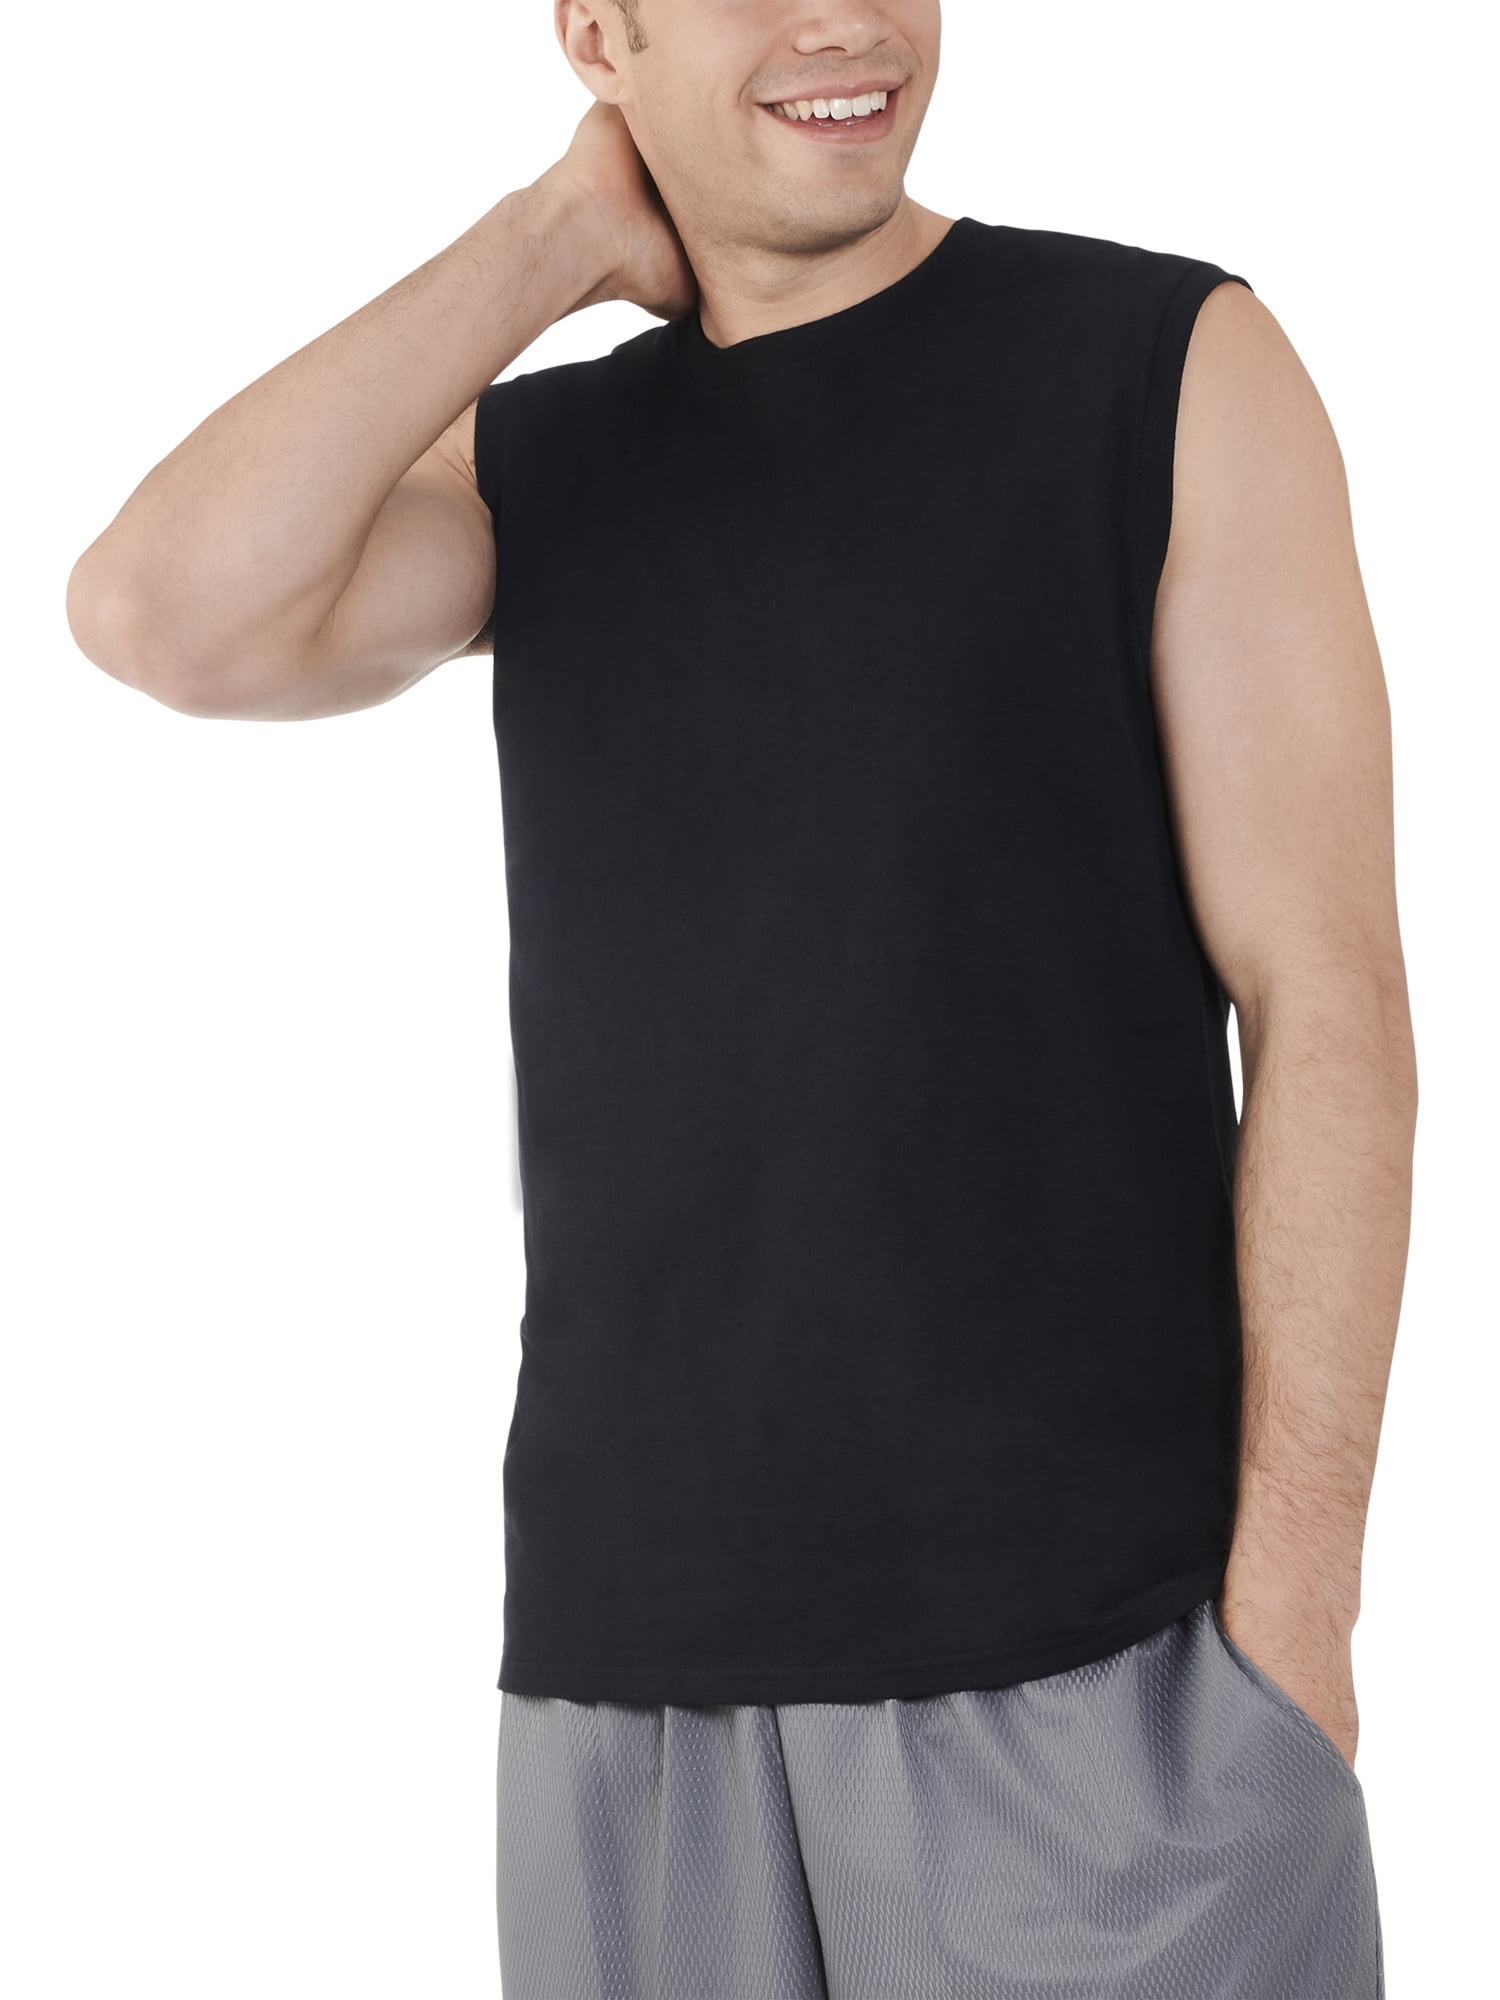 mens black muscle shirt